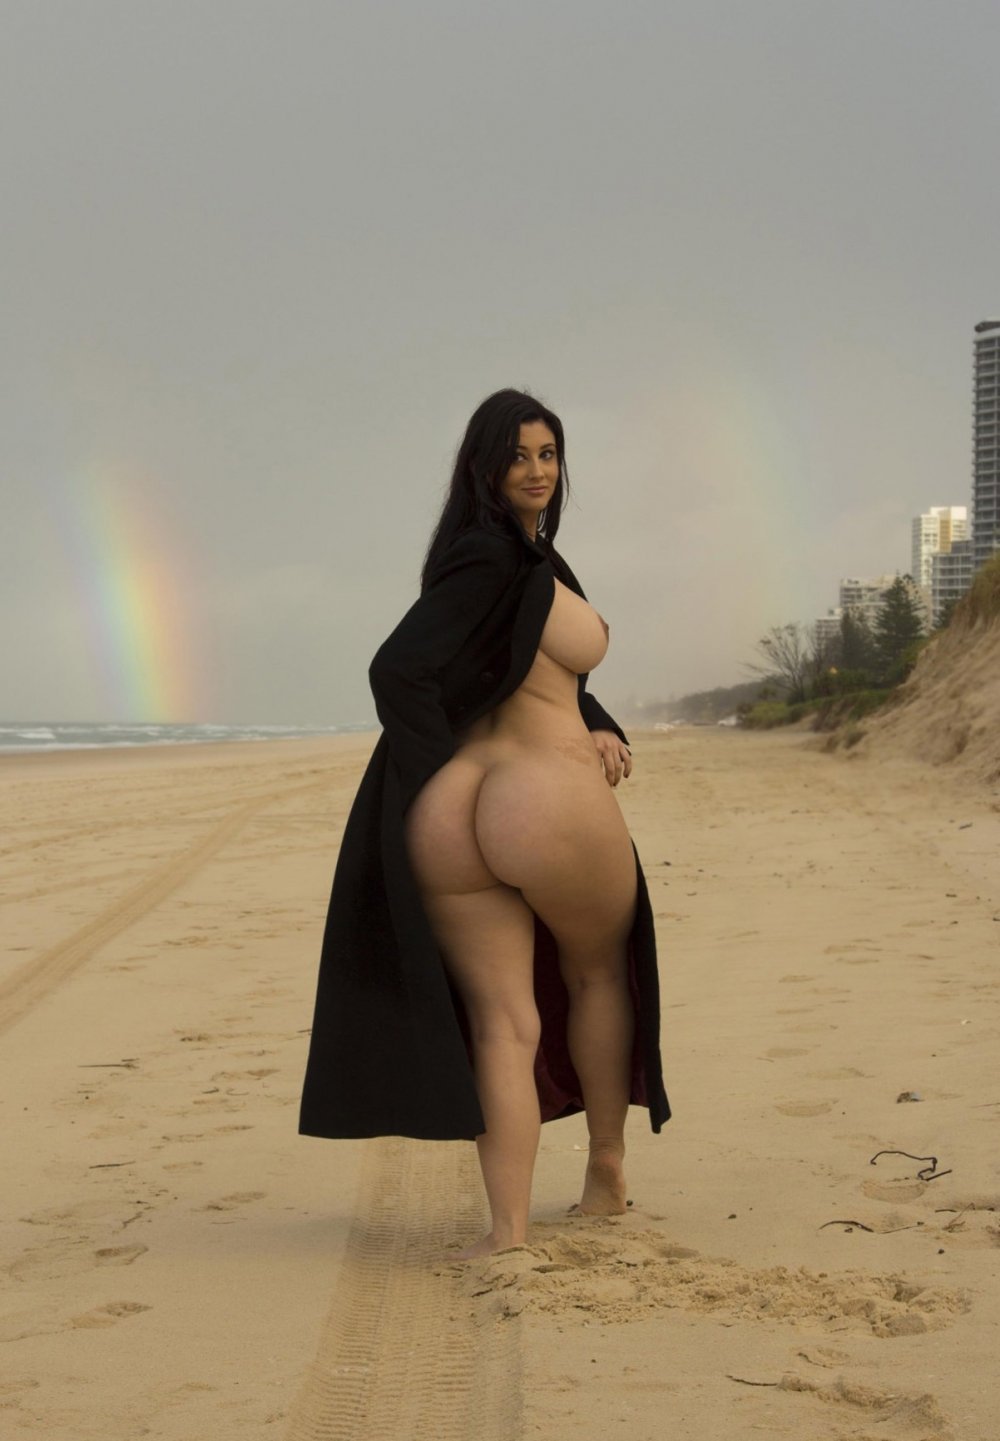 adegbola adewale share saudi arabia nude women photos